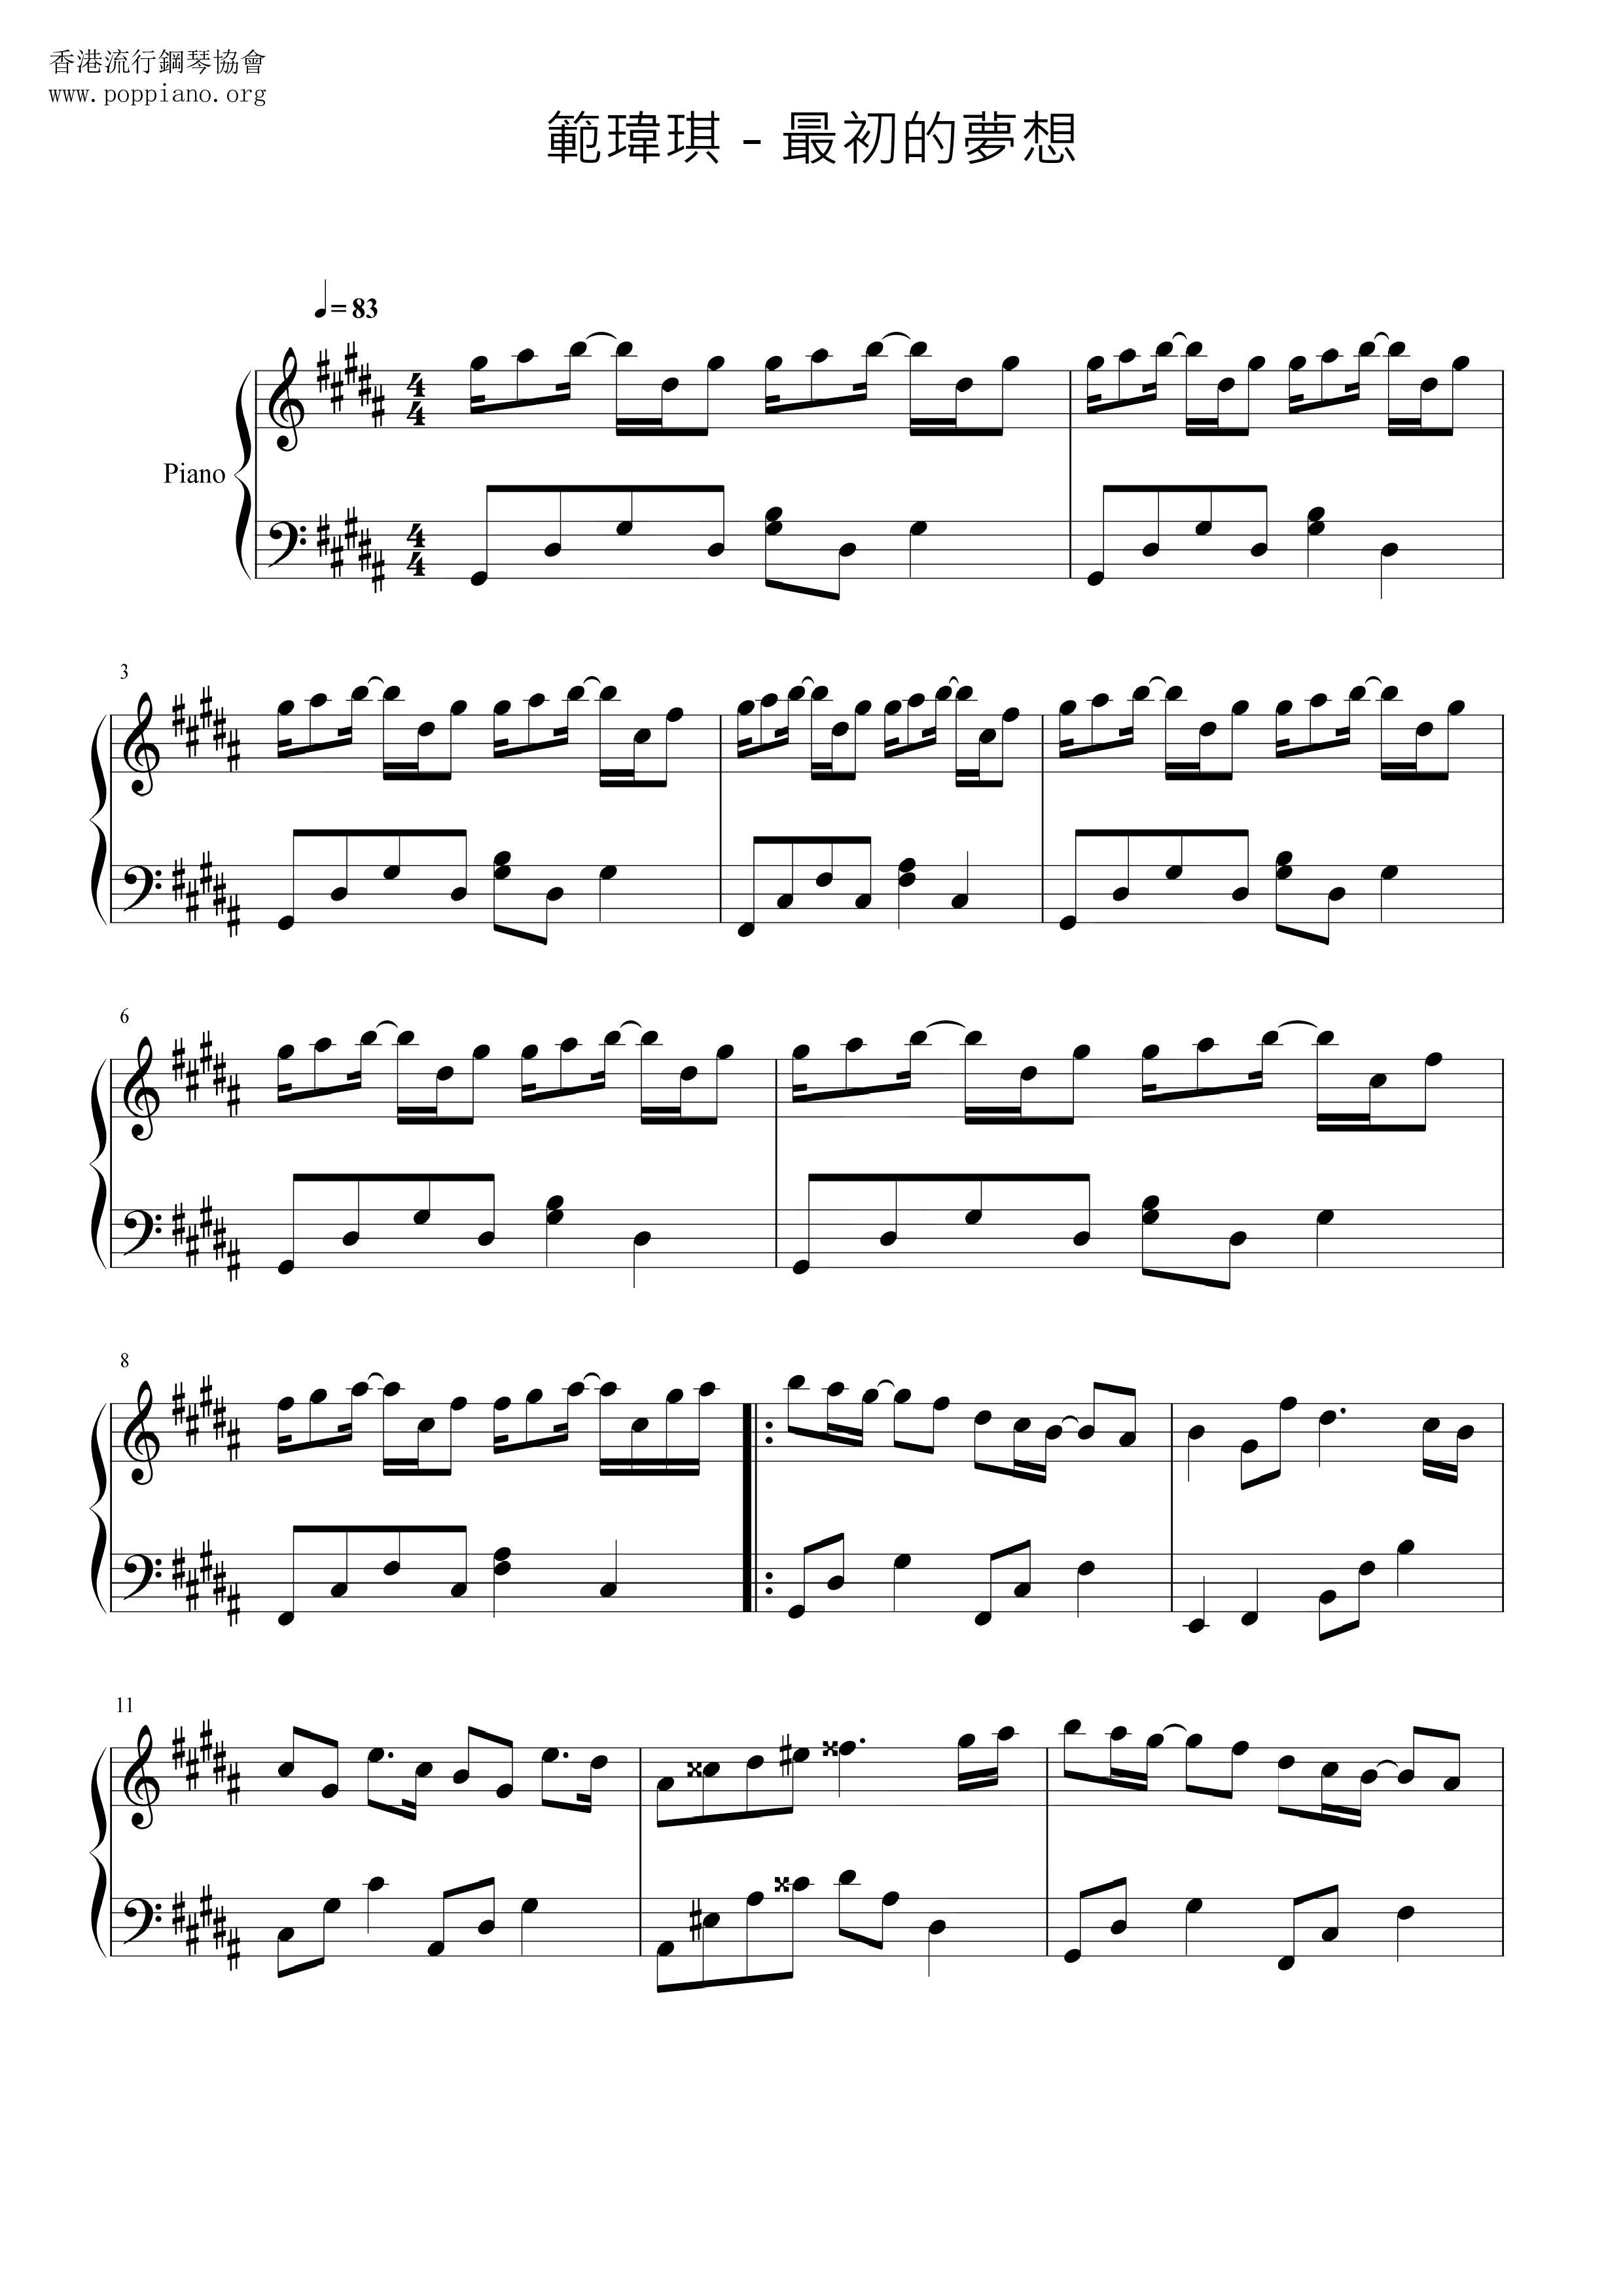 The Original Dream Score